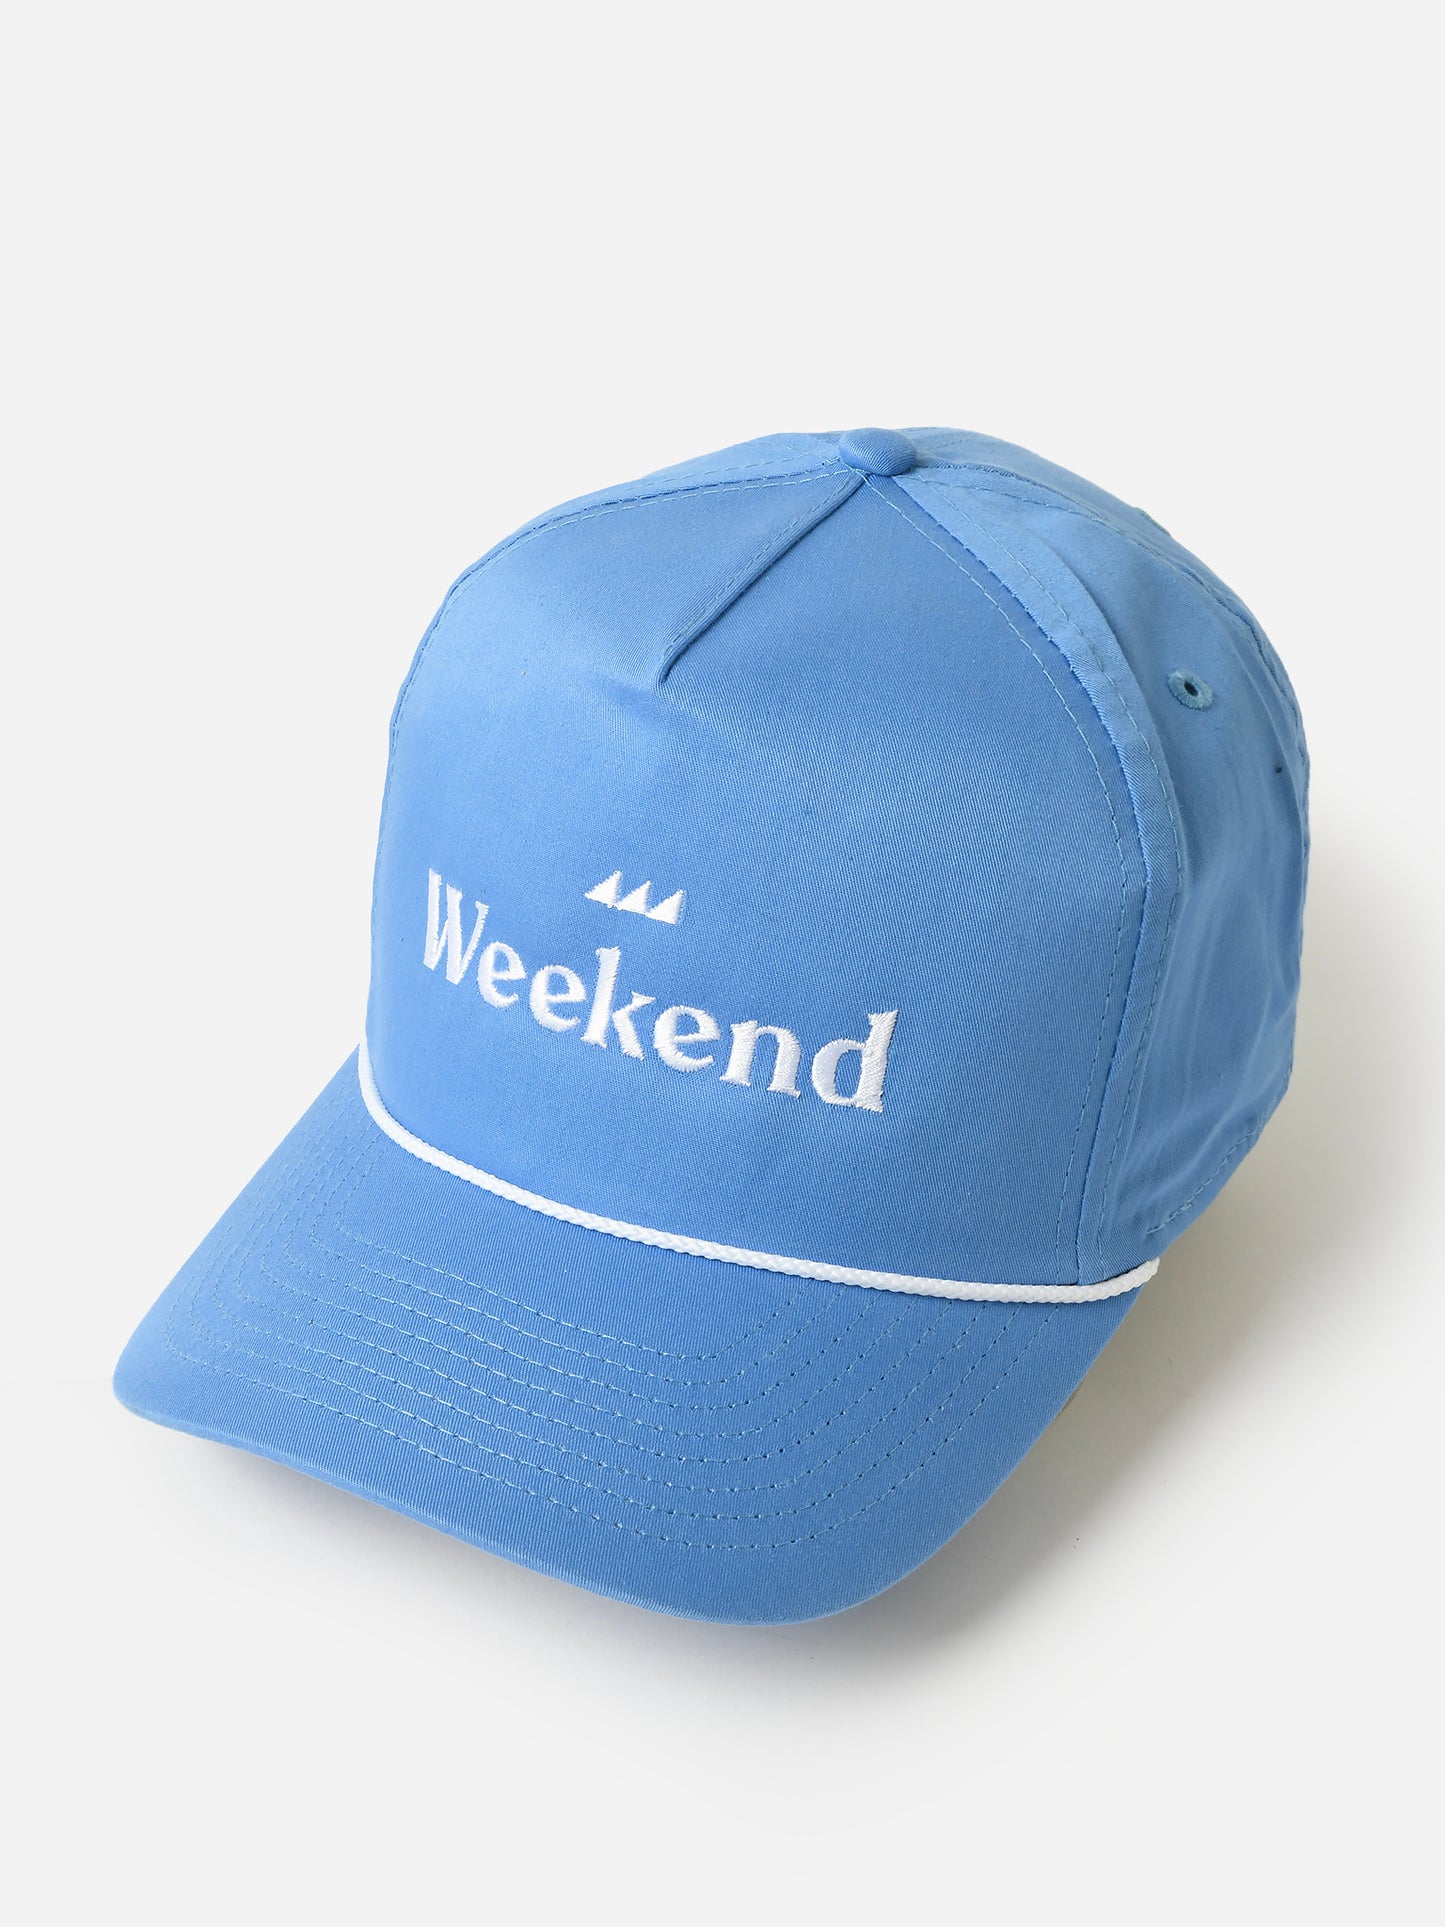 Weekend The Barnes Hat